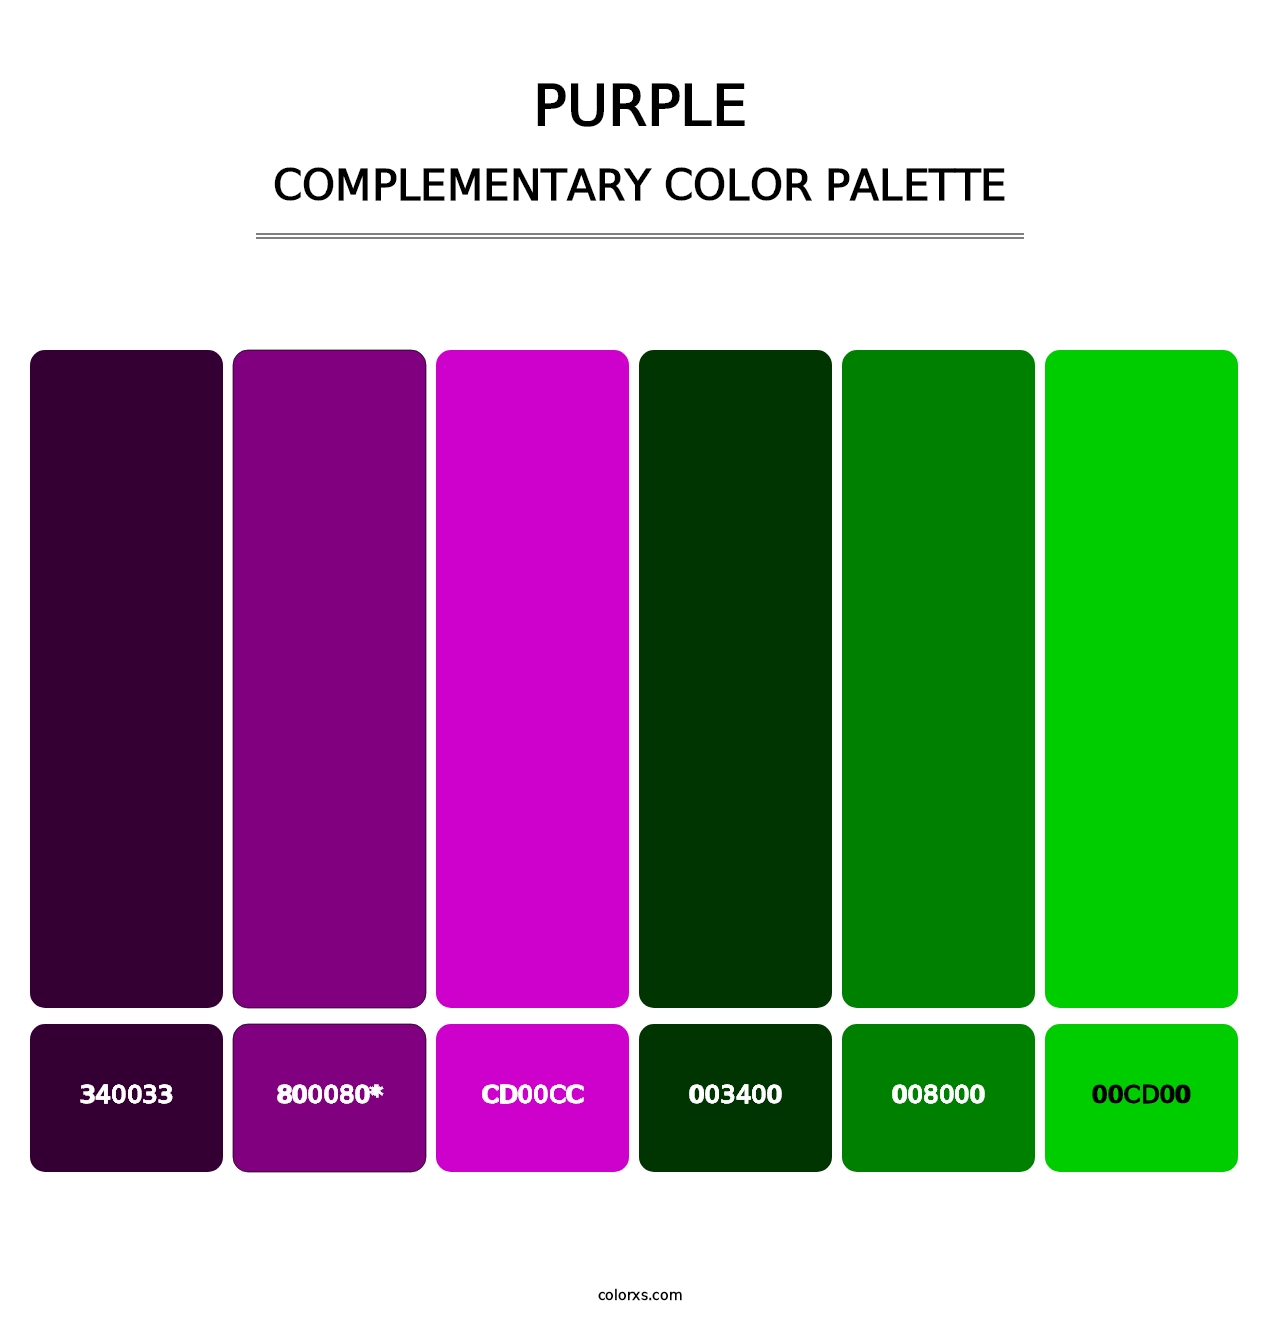 Purple - Complementary Color Palette